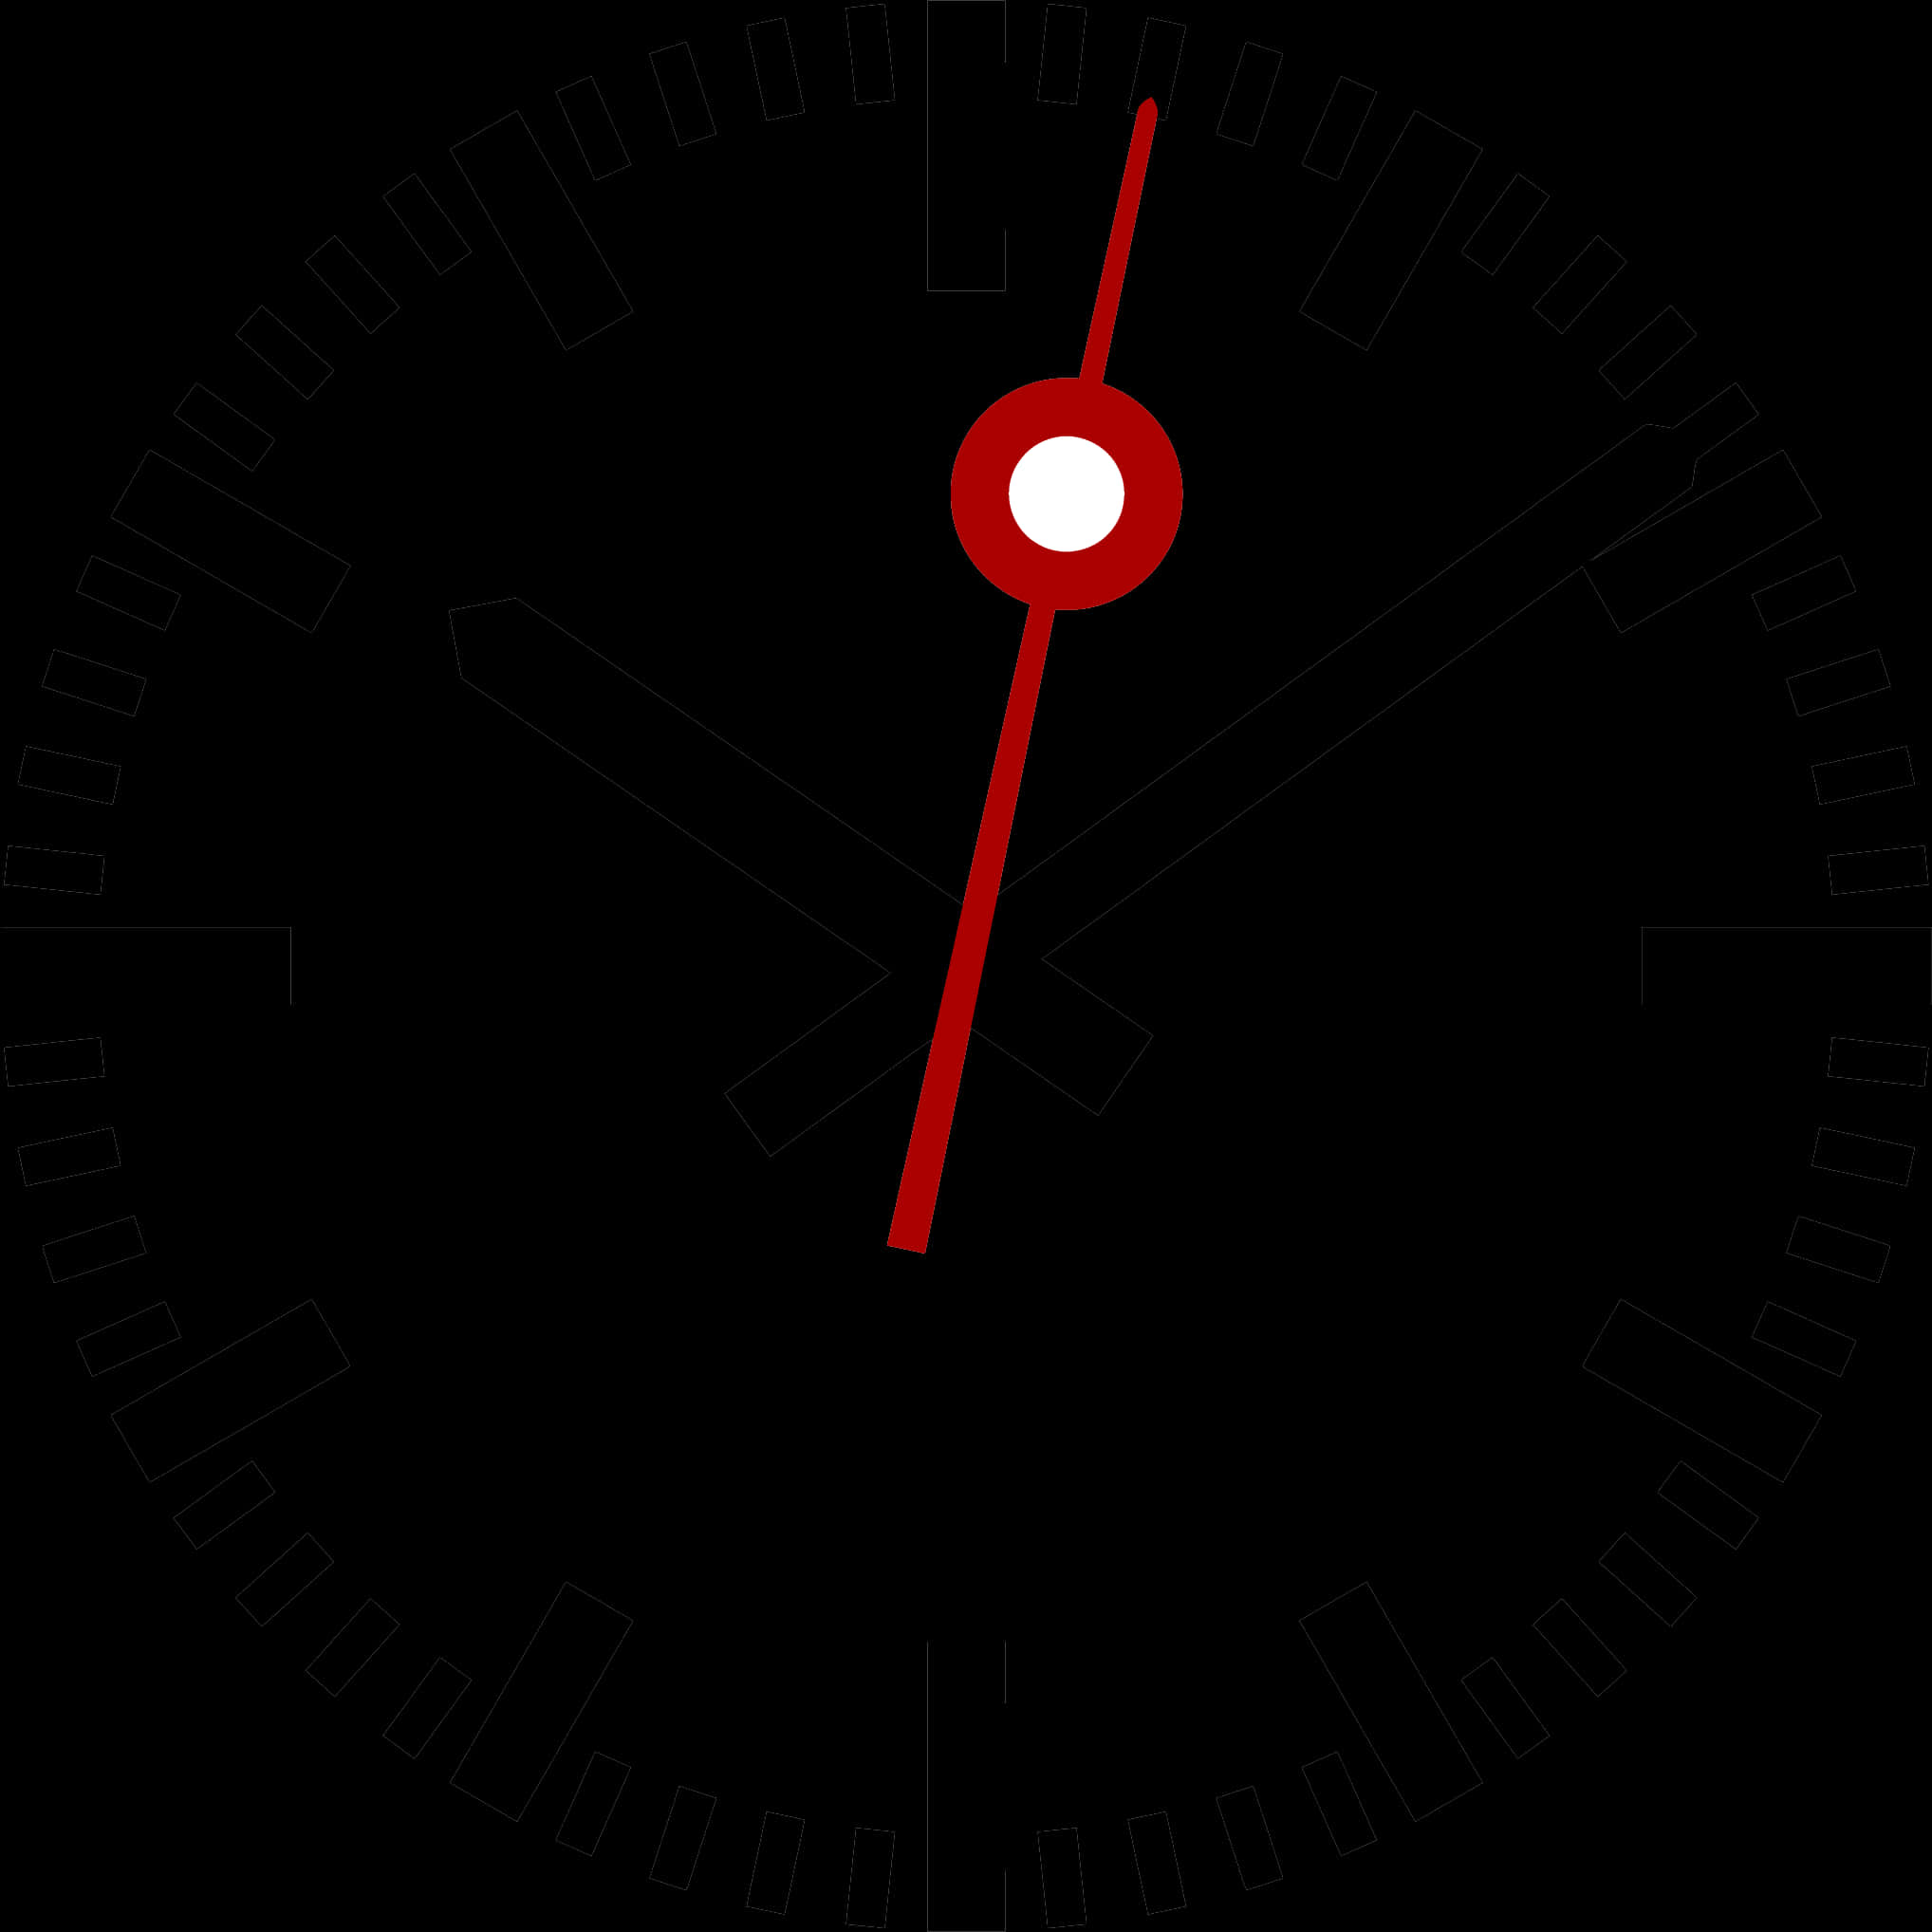 Minimalist Black Red Clock Face